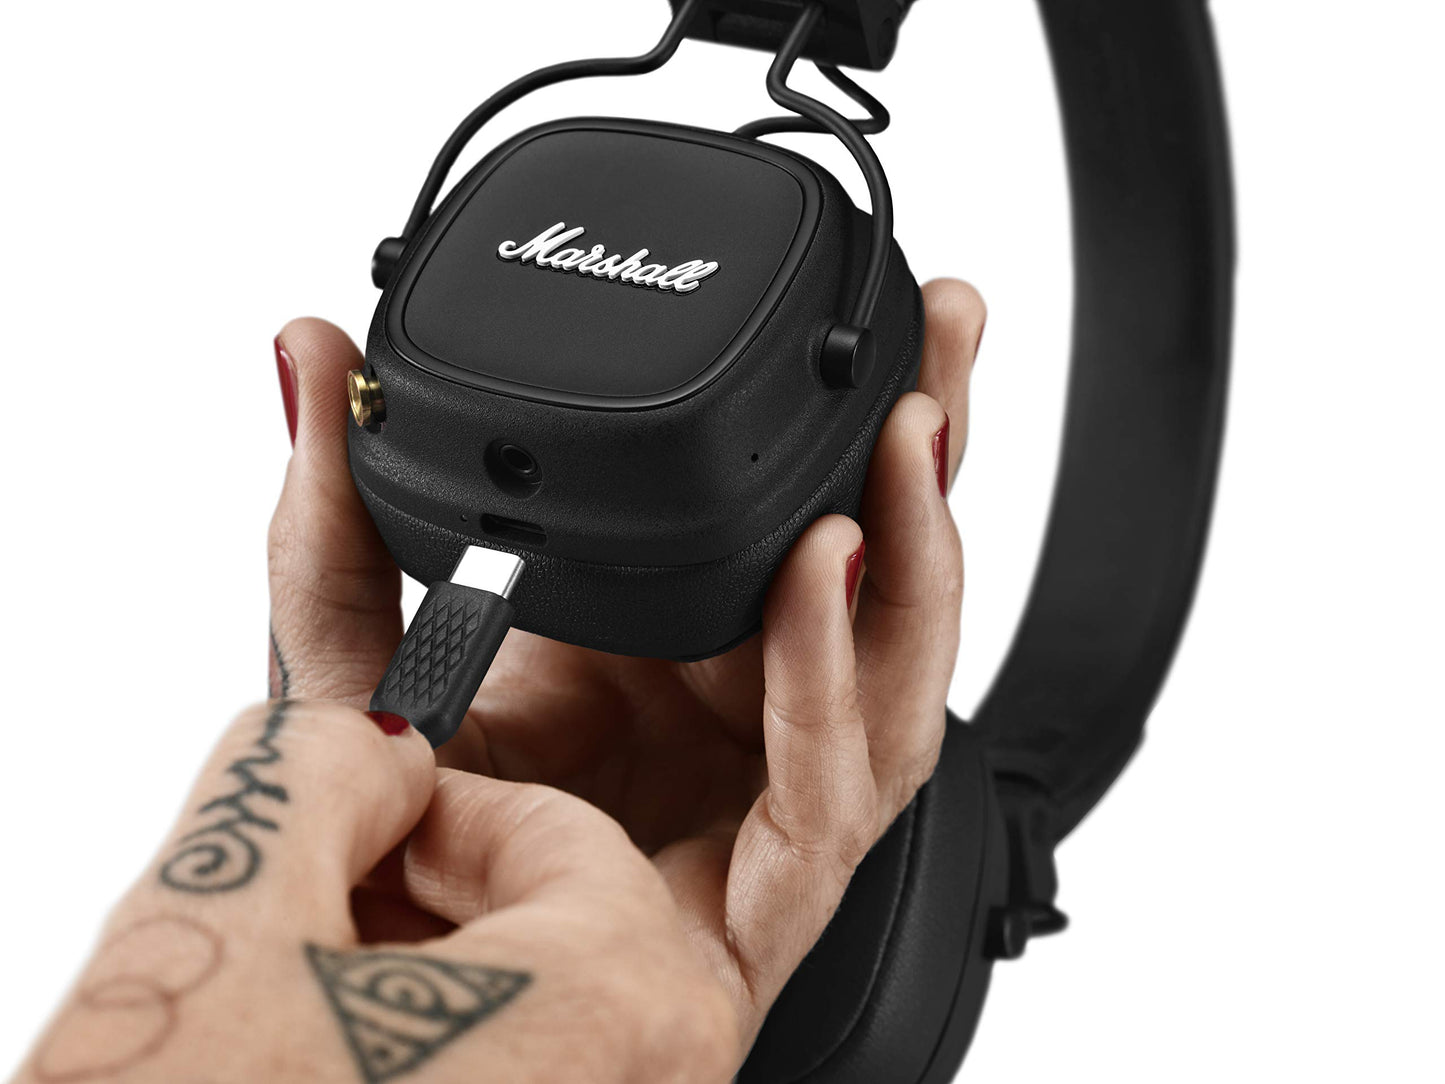 Marshall Major IV On Ear Bluetooth Headphones, Wireless Earphones, Foldable, 80+ Hours Wireless playtime- Black